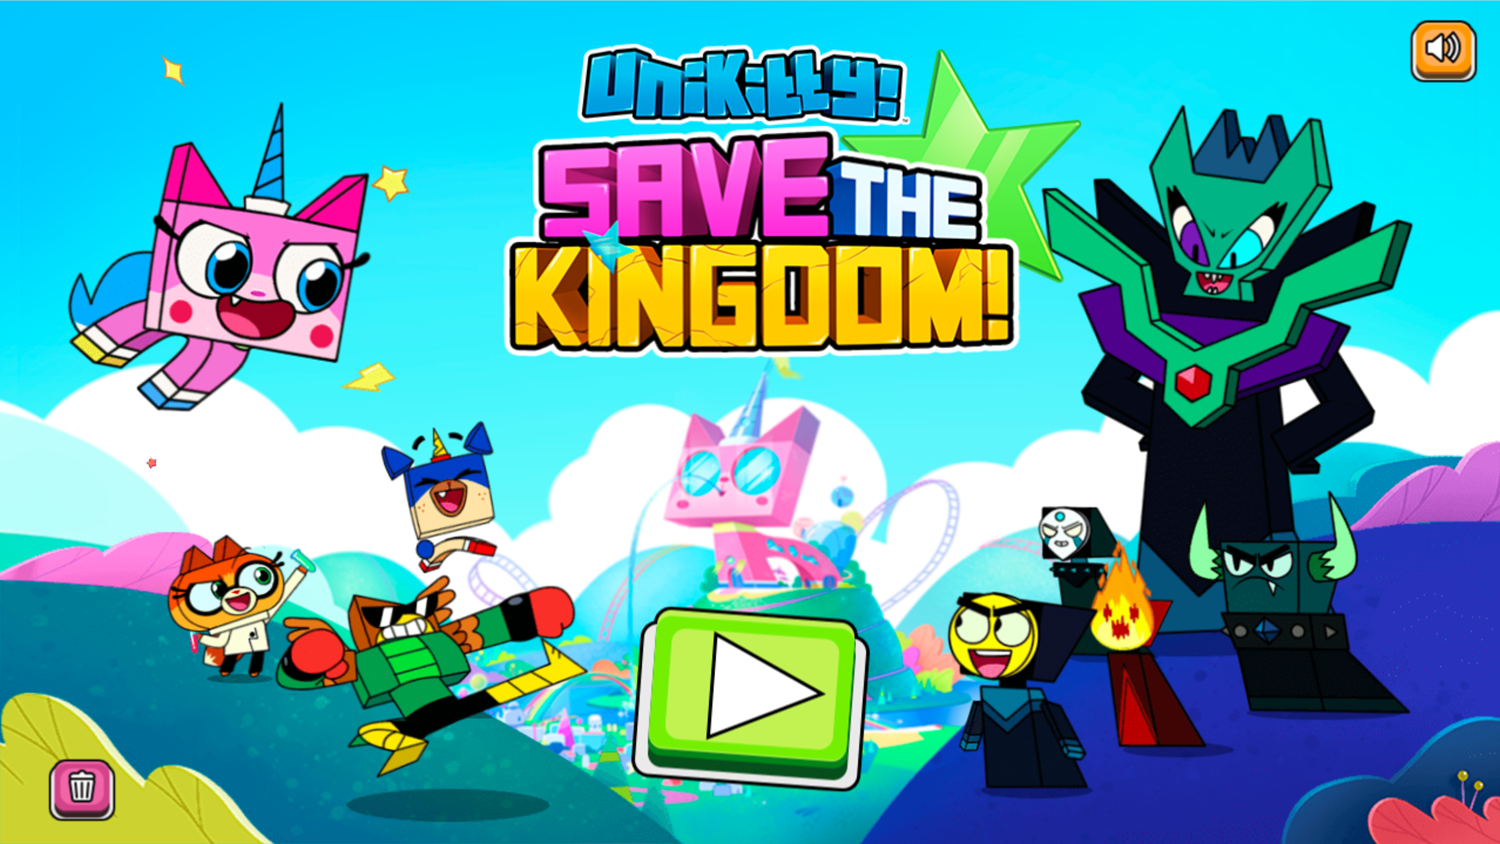 UniKitty Save the Kingdom Welcome Screen Screenshot.